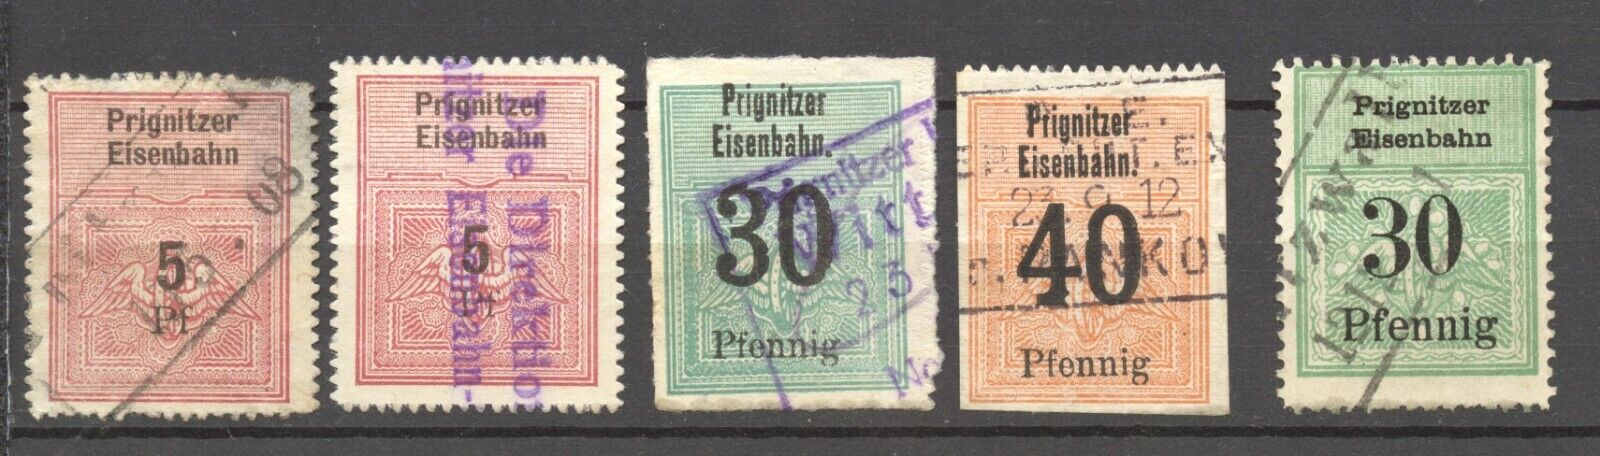  Railroad Stamps 1907 Prignitzer EB Erler Lot of 5, used Без бренда